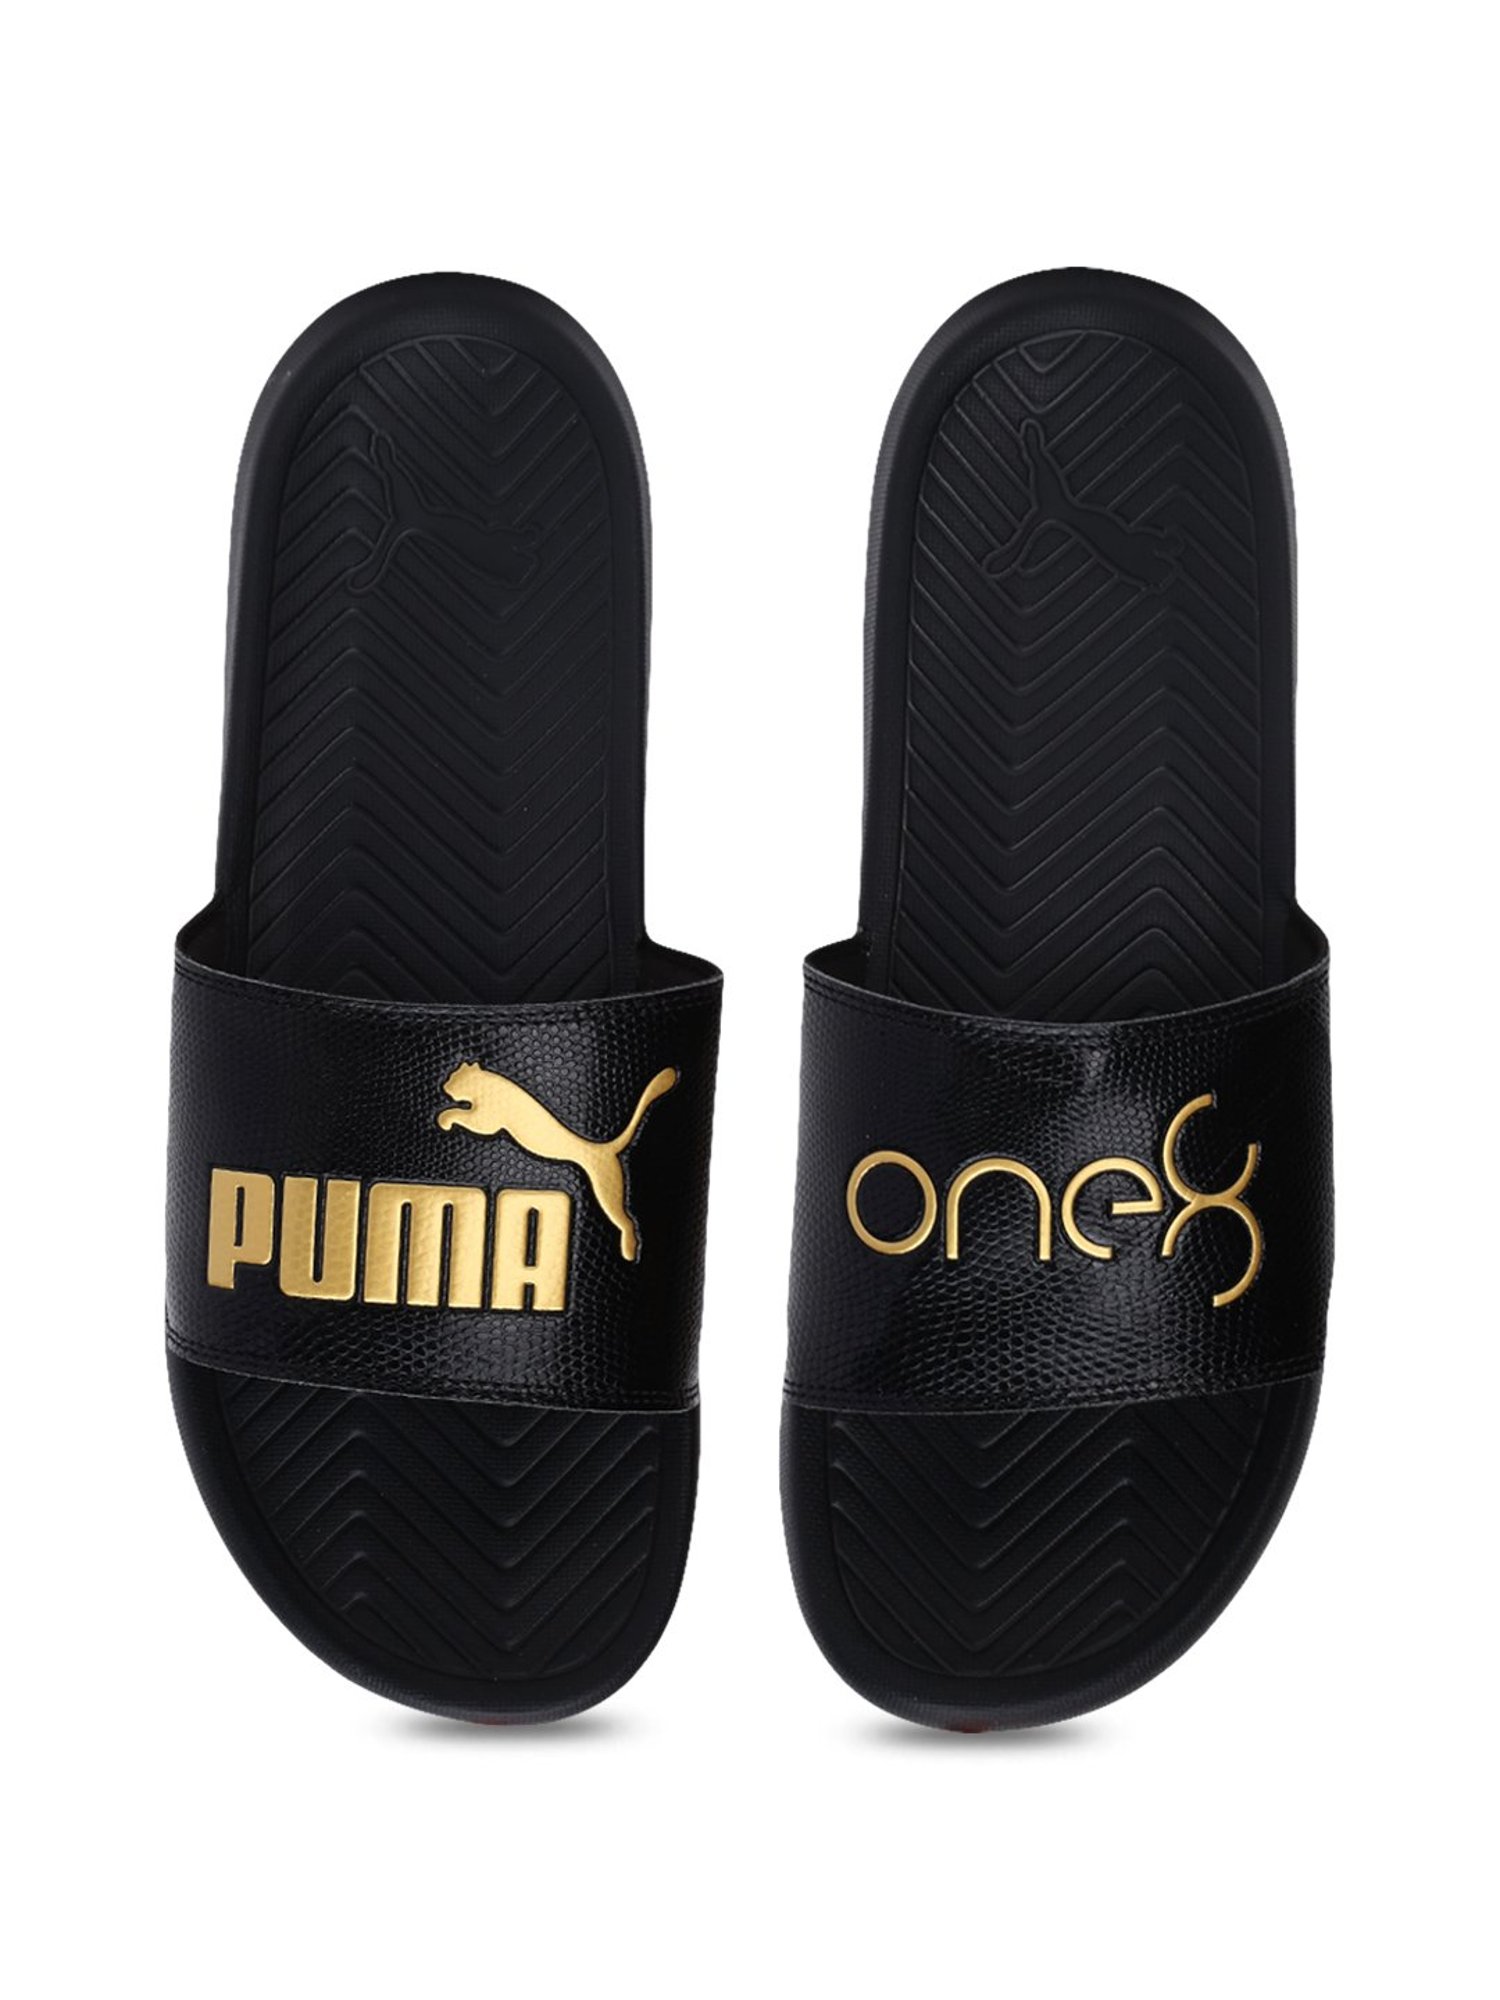 Buy > puma onex > in stock